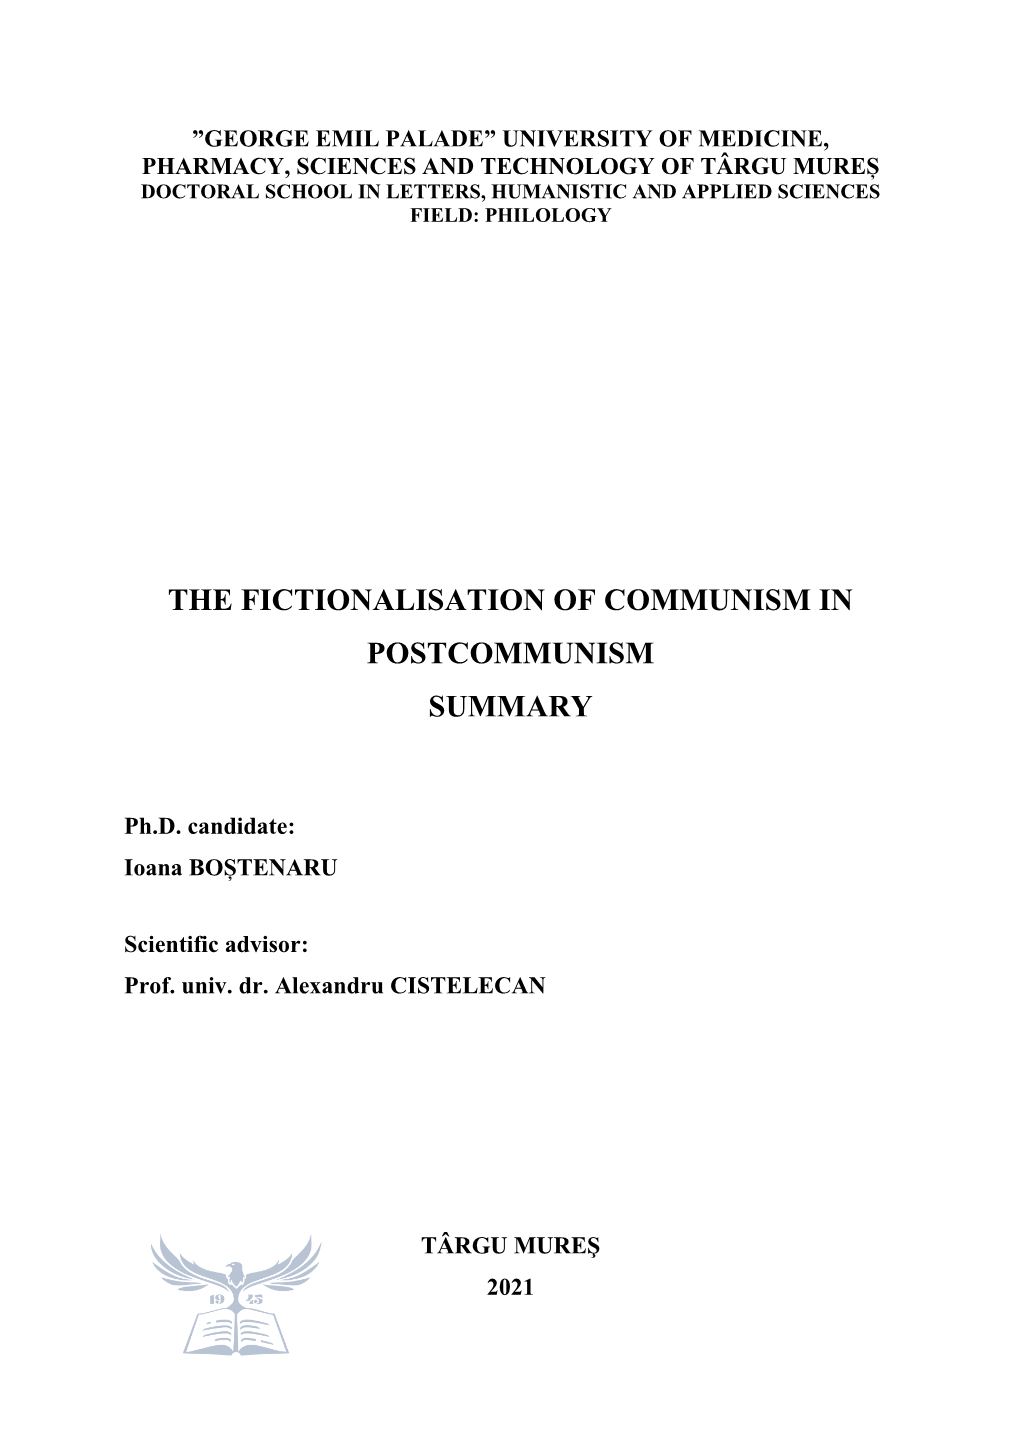 The Fictionalisation of Communism in Postcommunism Summary